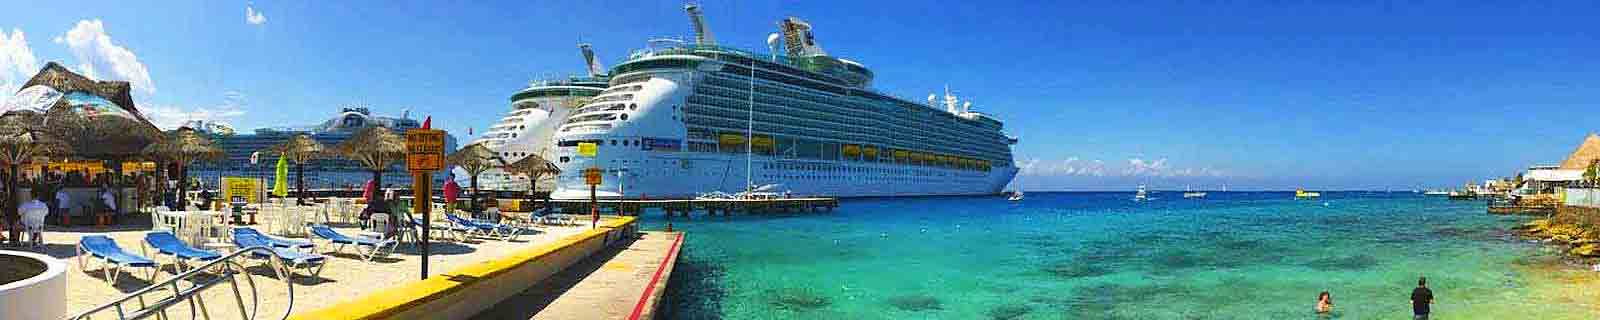 Photo of cruise ships docked in Cozumel